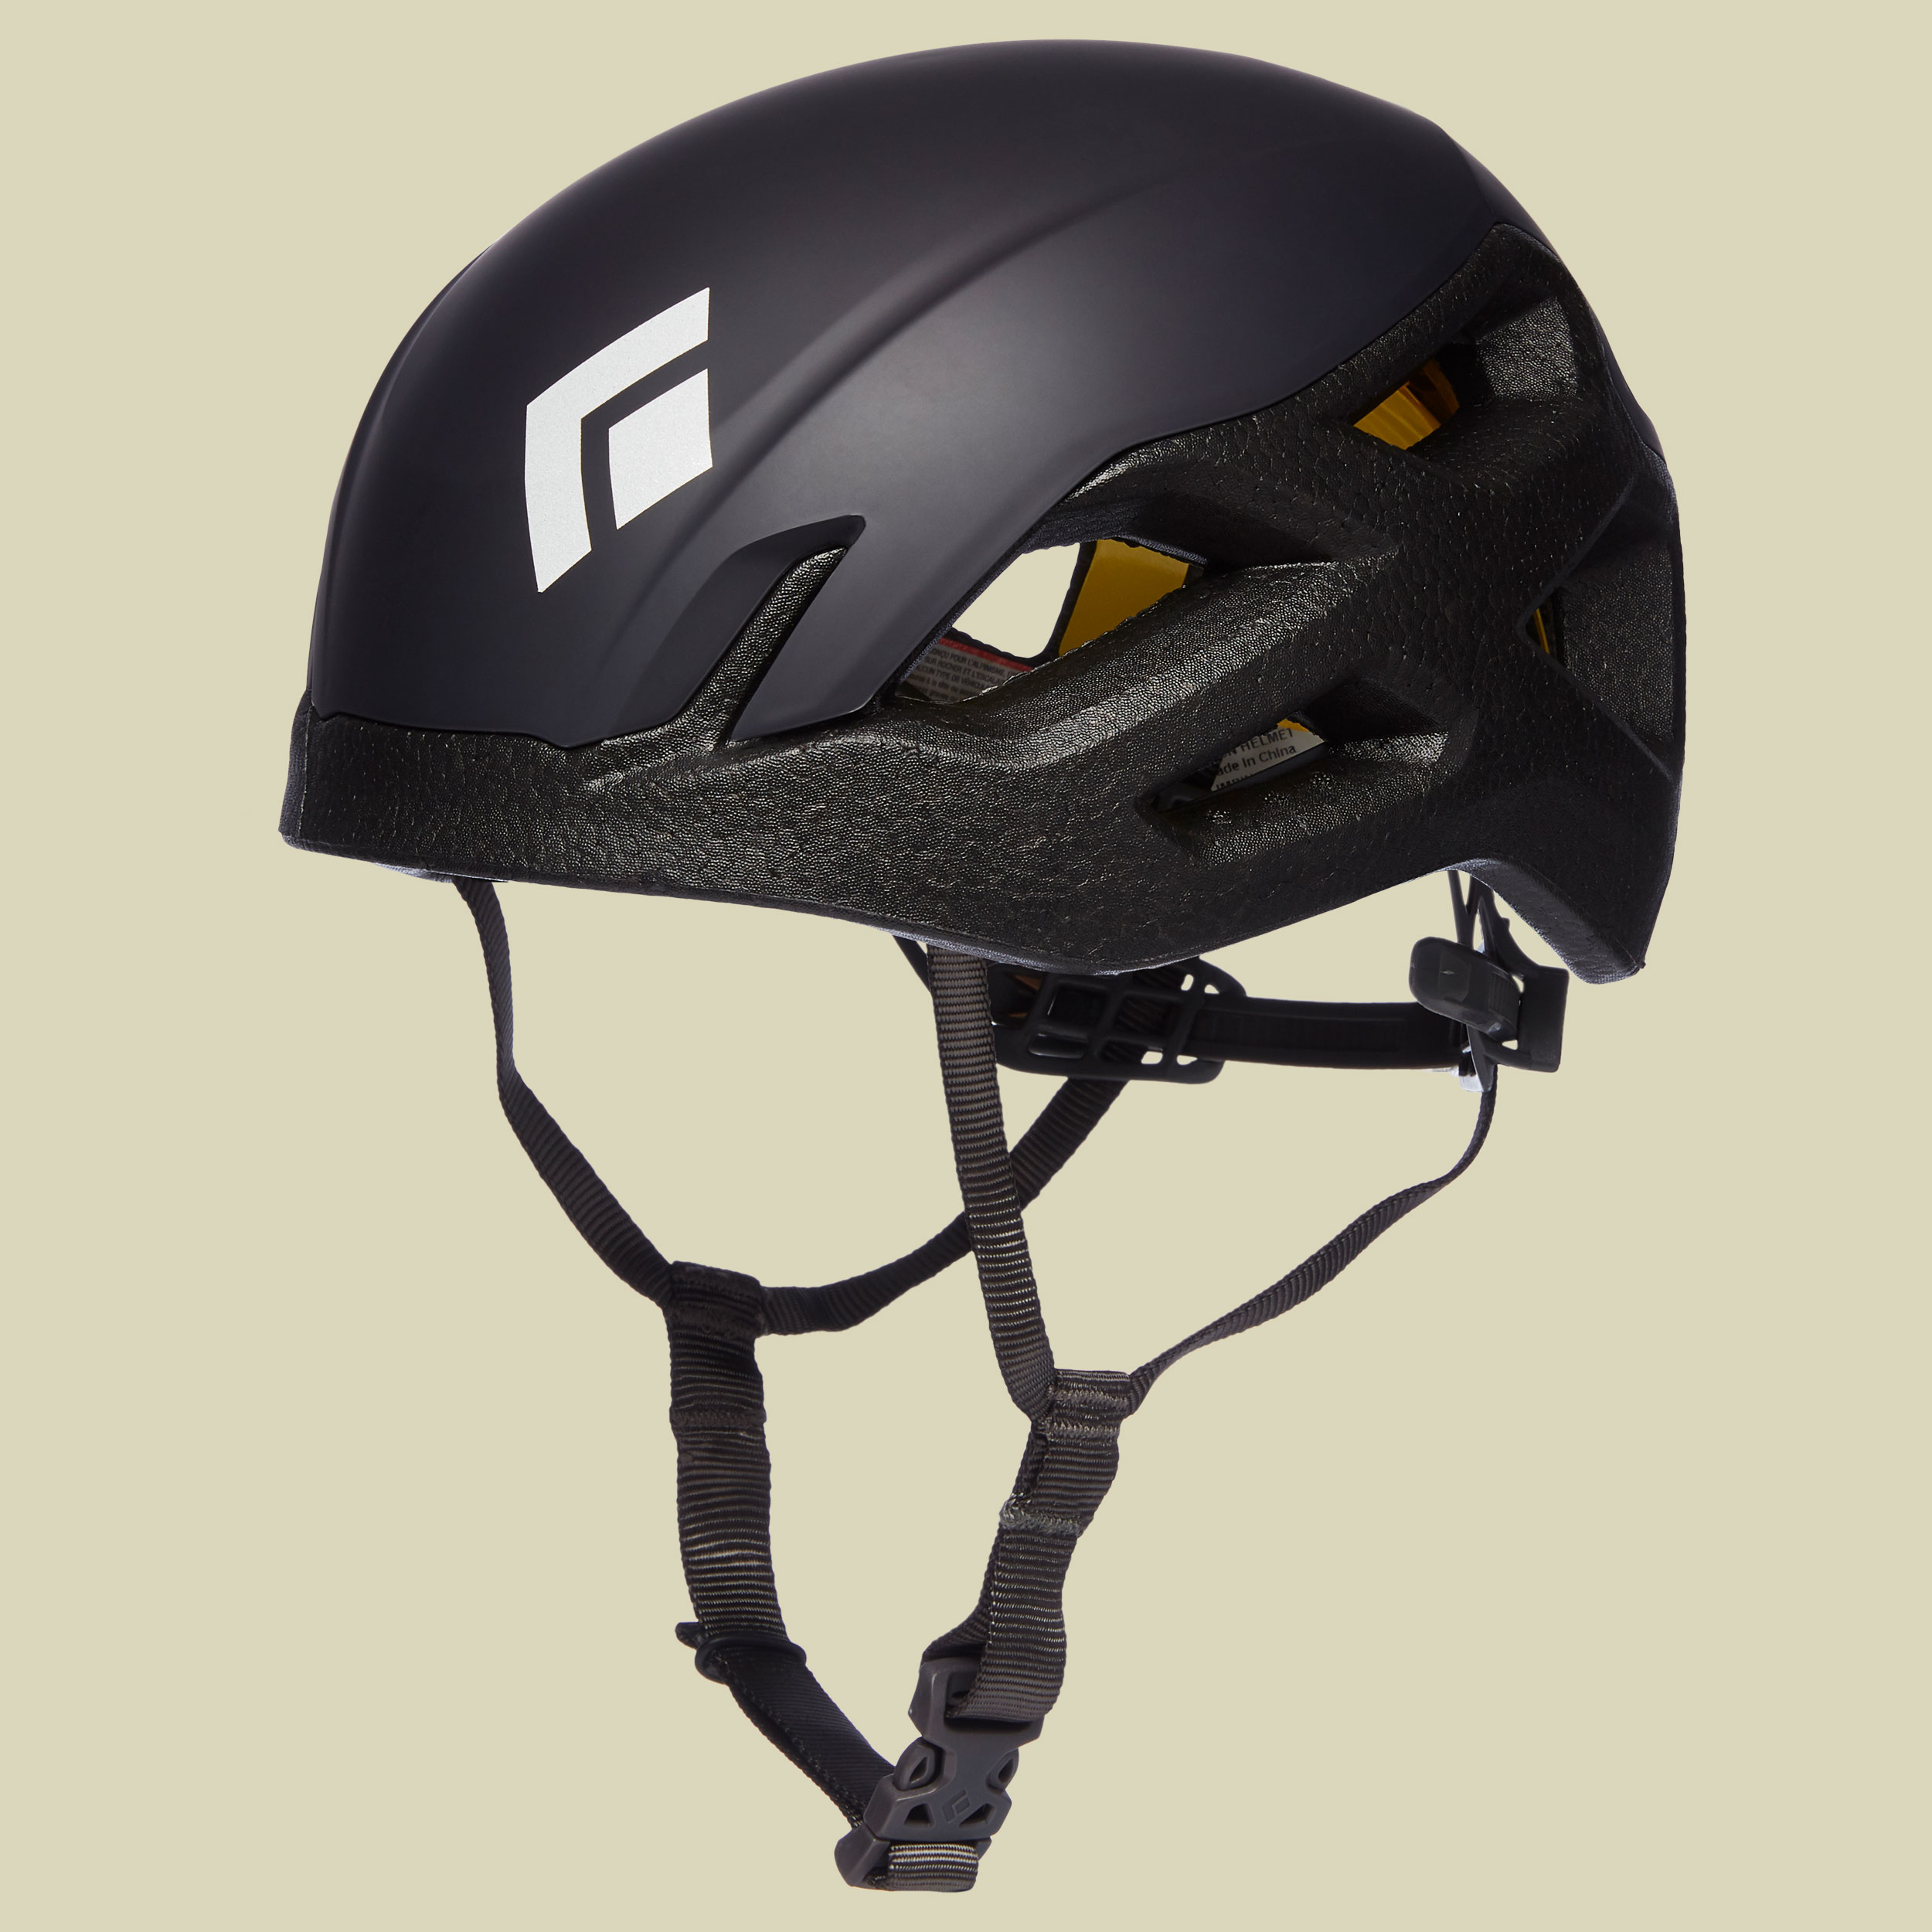 Vision Helmet Mips Unisex Größe S-M Farbe black